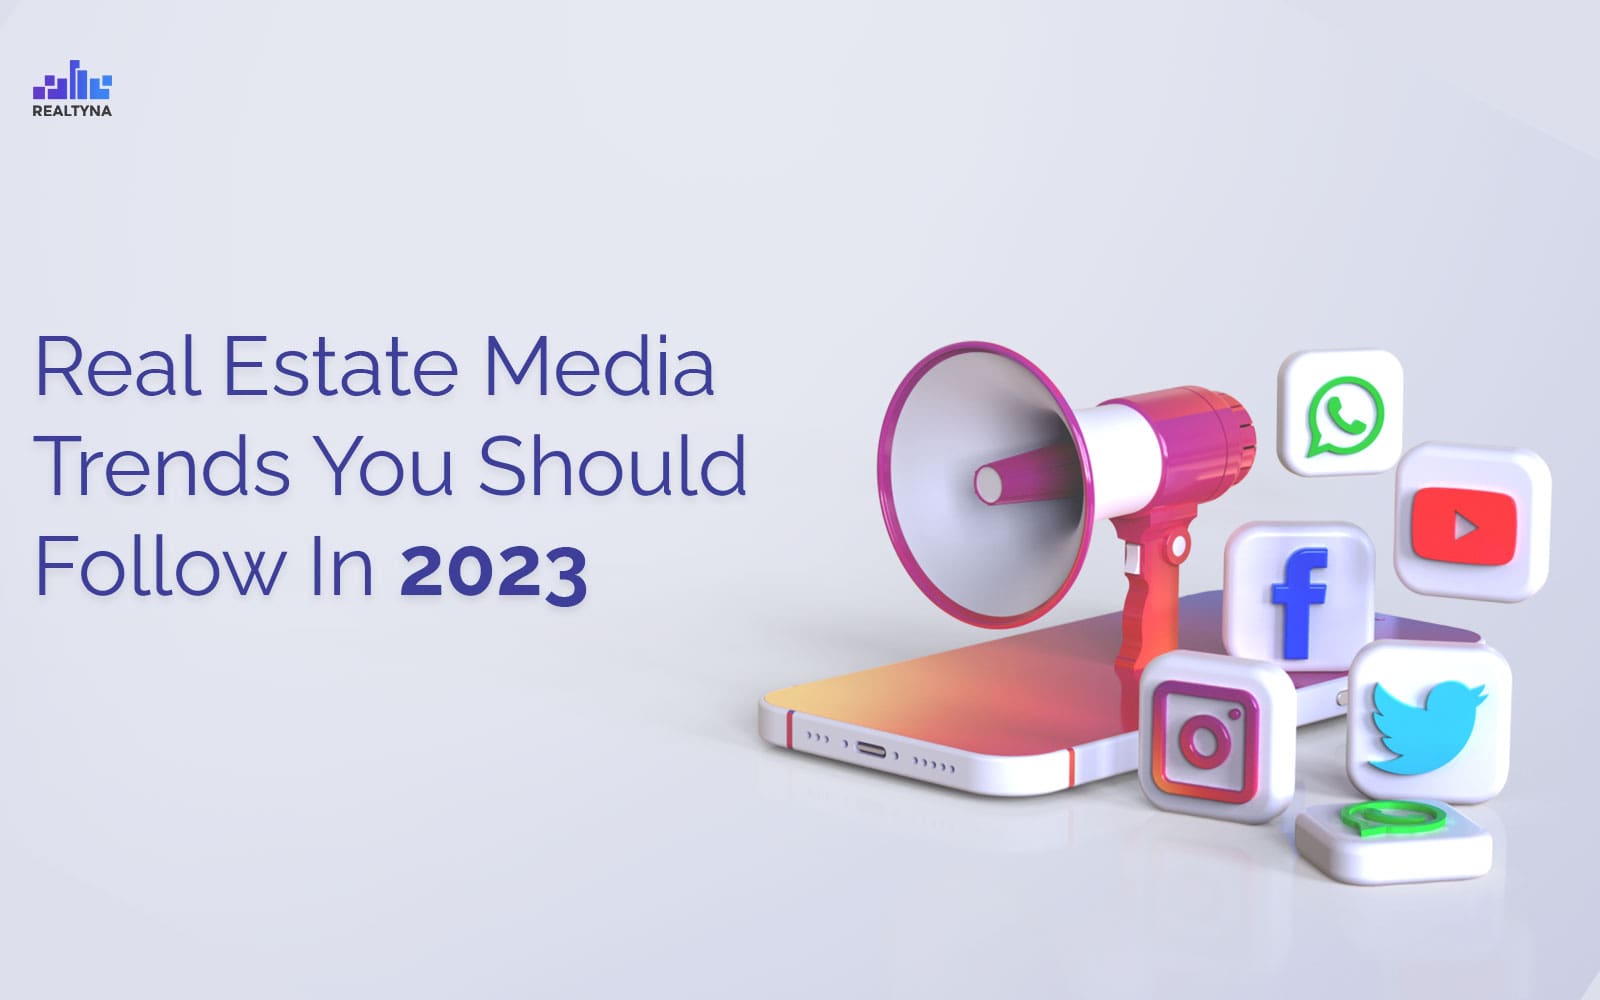 rna real estate media trends 2023